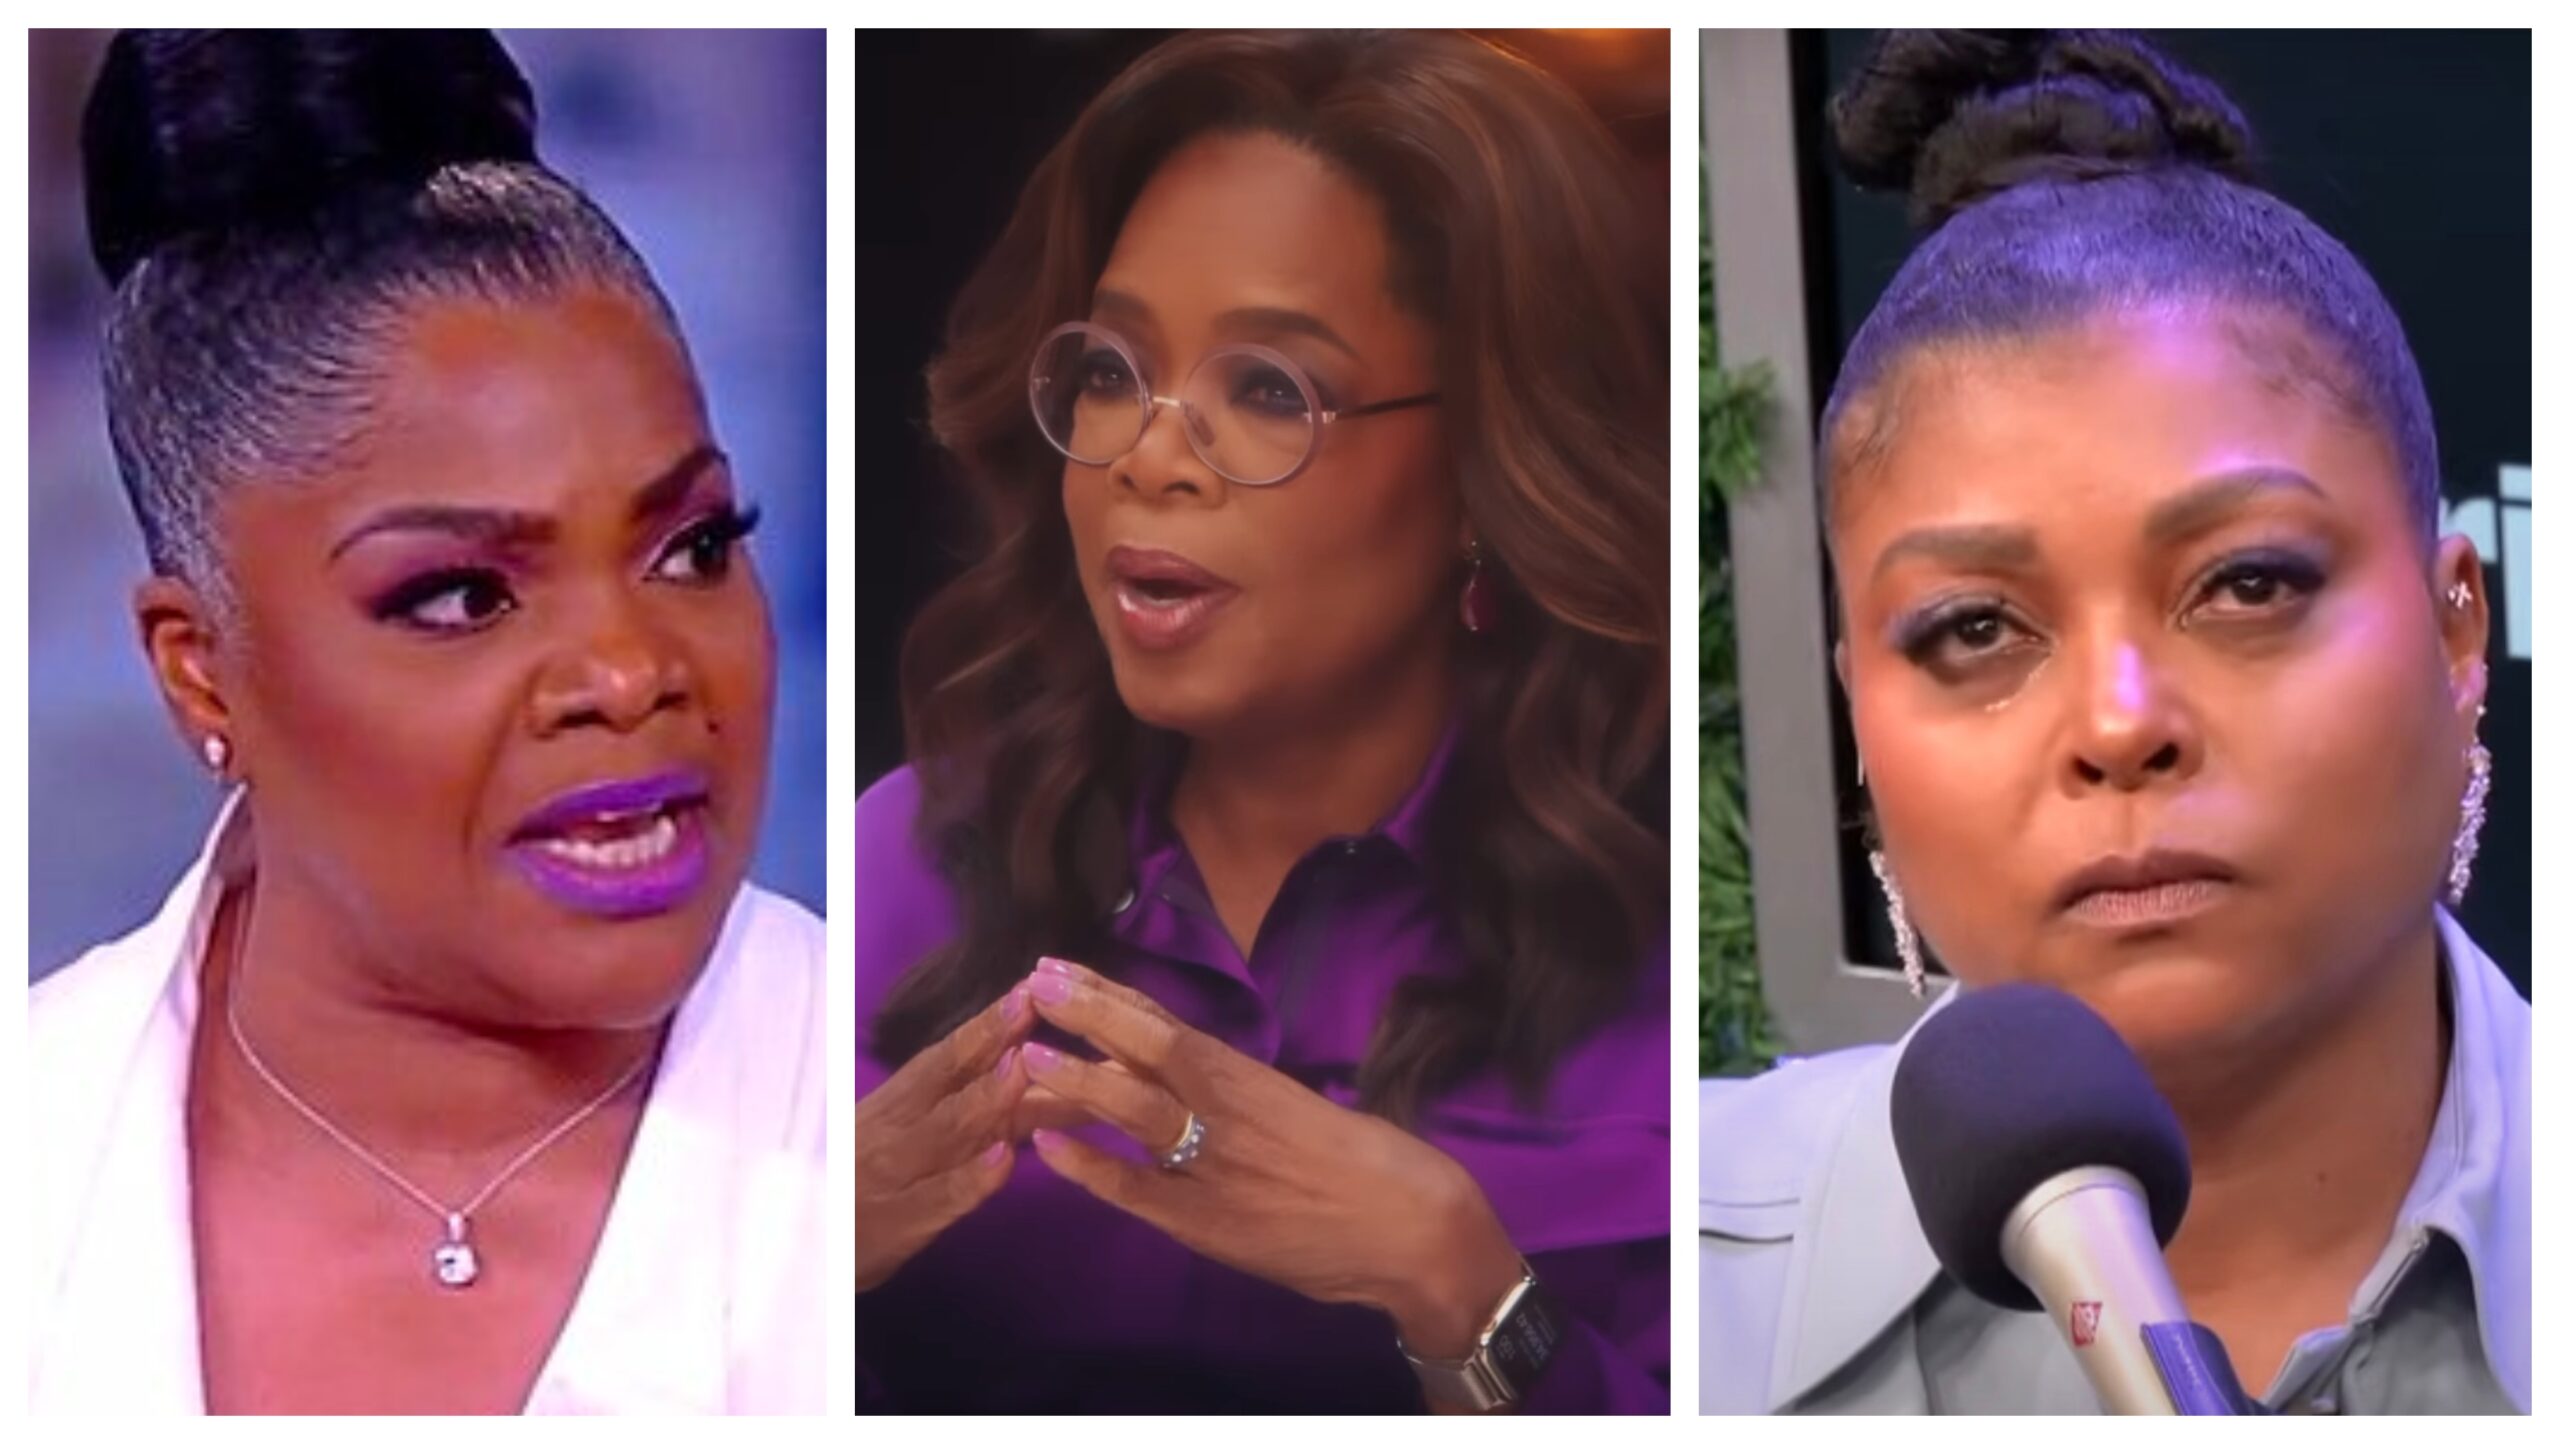 Mo’Nique SLAMS Oprah Winfrey After Taraji P. Henson’s Set Issues: She “Got Caught”